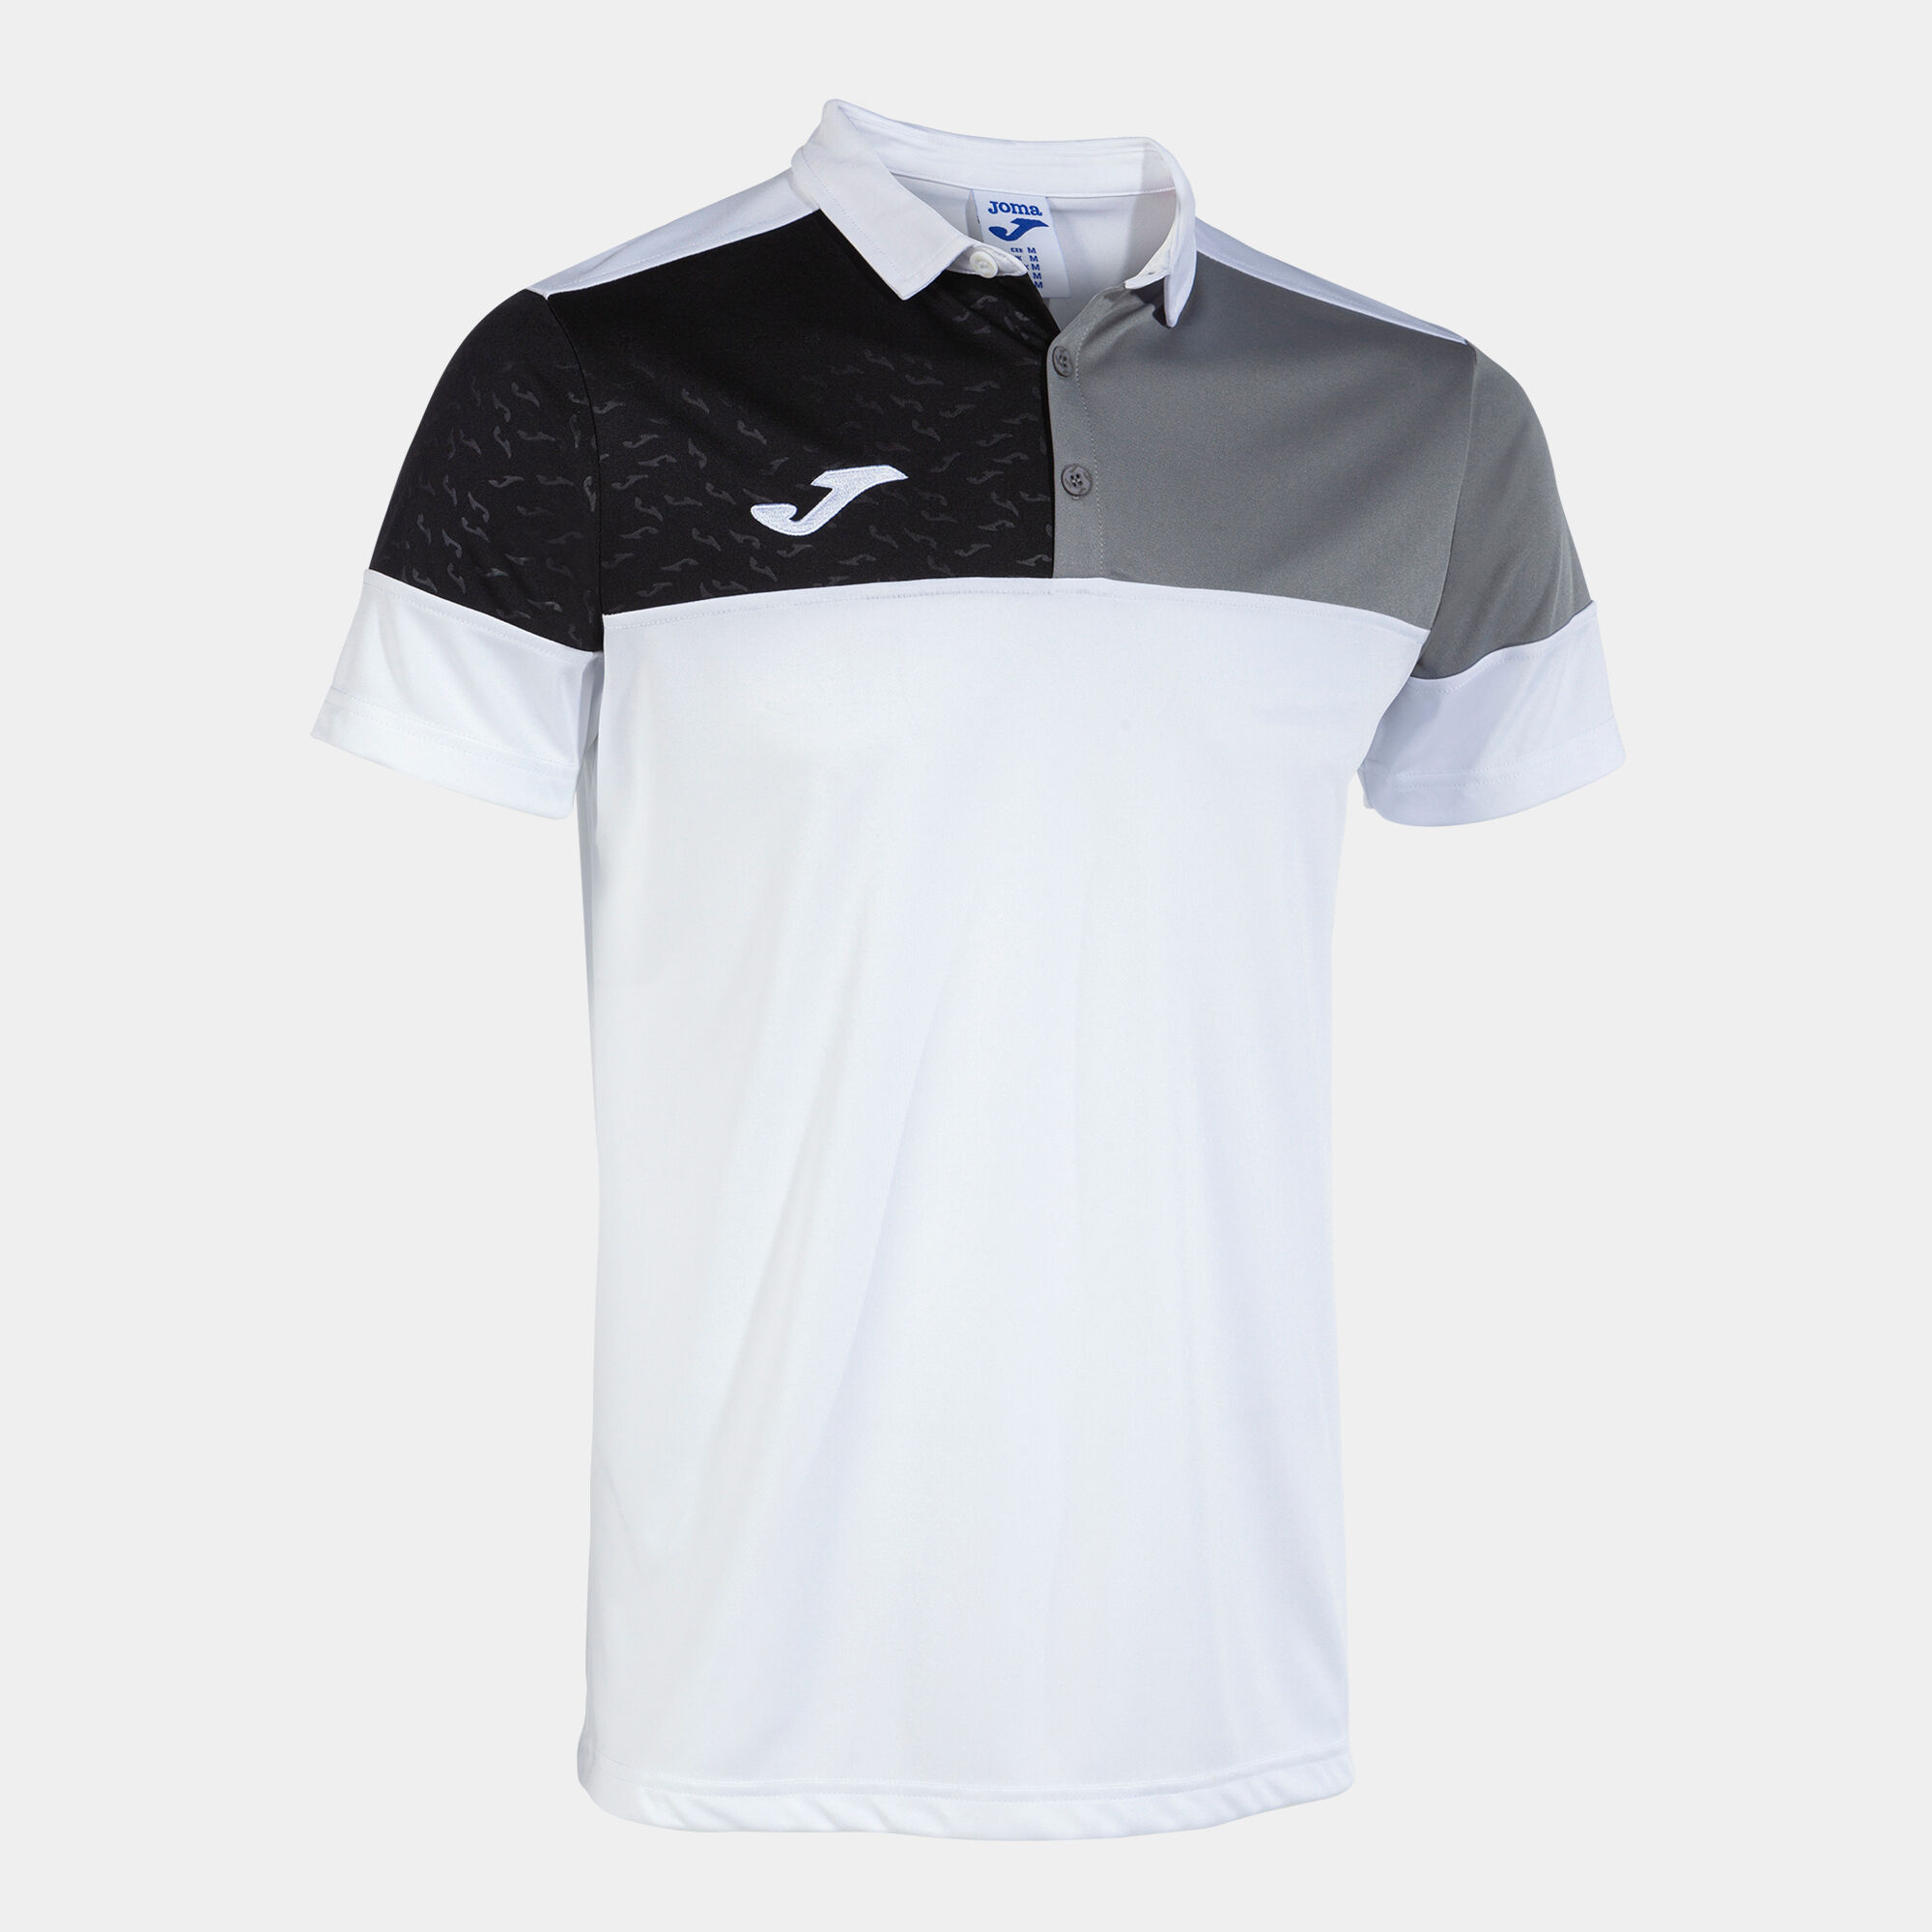 Polo shirt short-sleeve man Crew V white gray